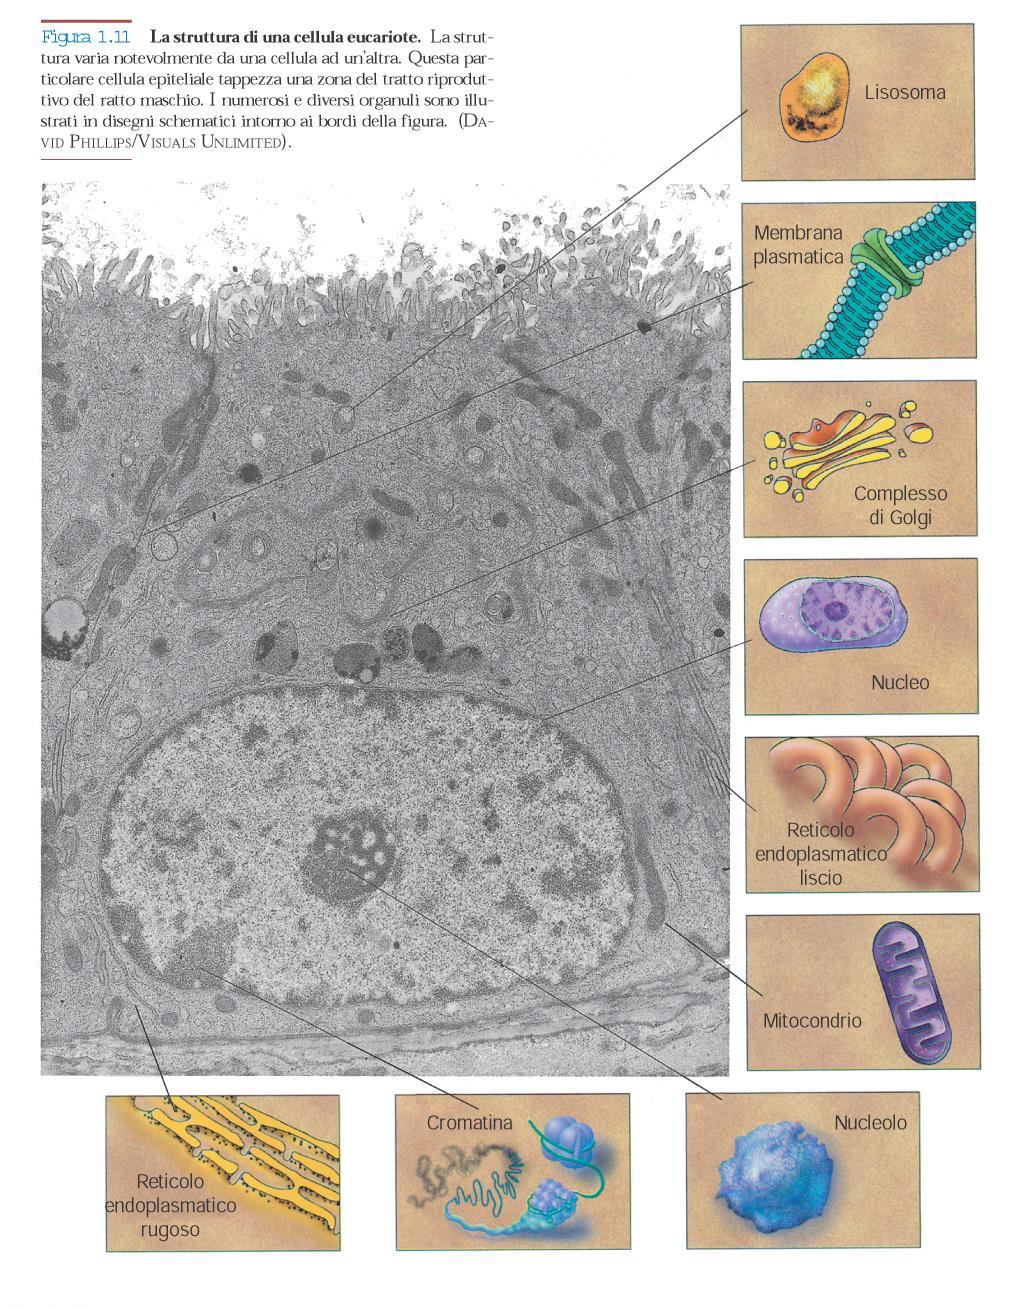 Eucarioti: - Unicellulari e pluricellulari - Presenza di